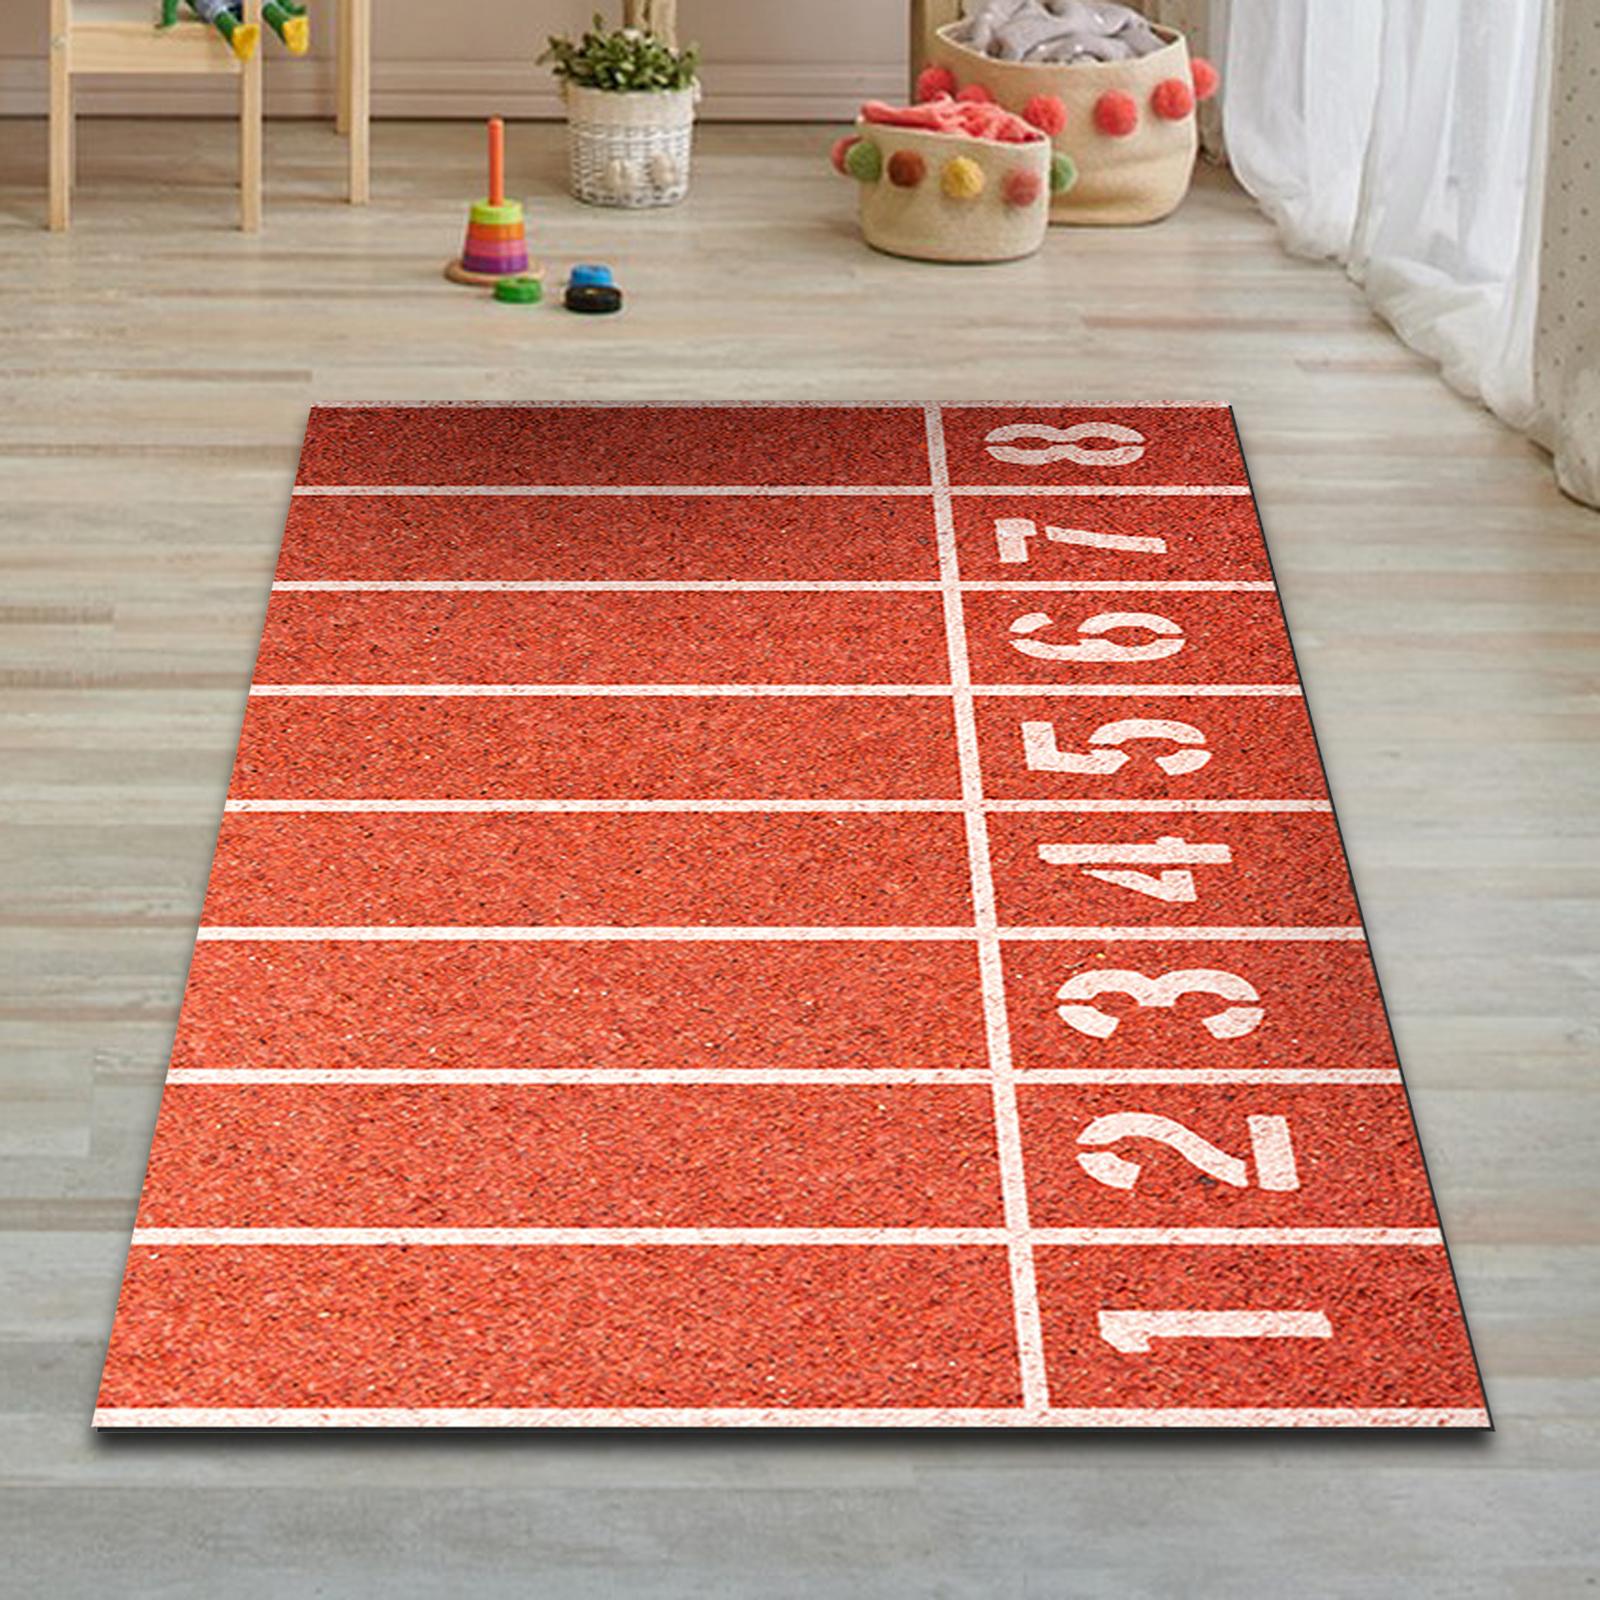 Sports Field Rugs Kids Play Mat Blanket Carpets 50cmx80cm Red